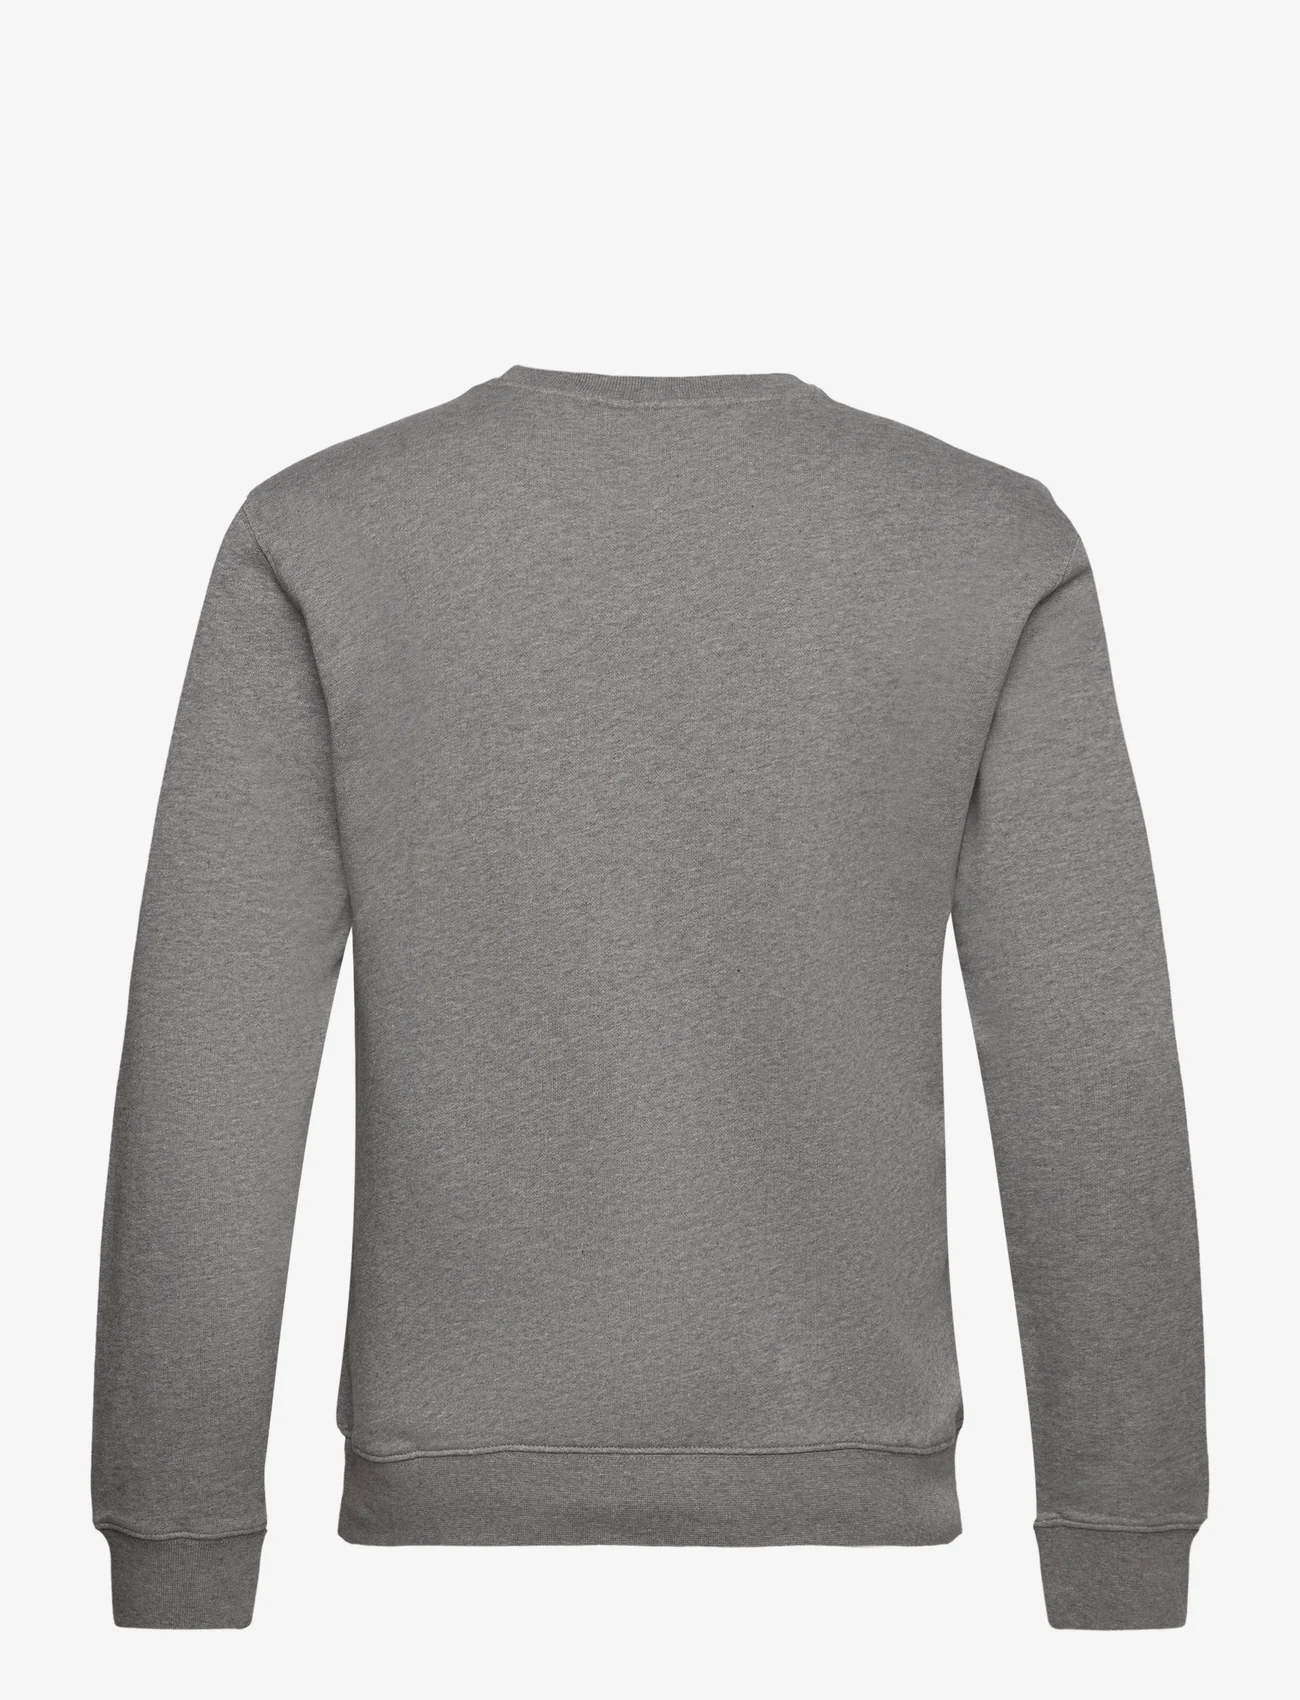 J. Lindeberg - M Crew Neck Sweat - sweatshirts - grey melange - 1